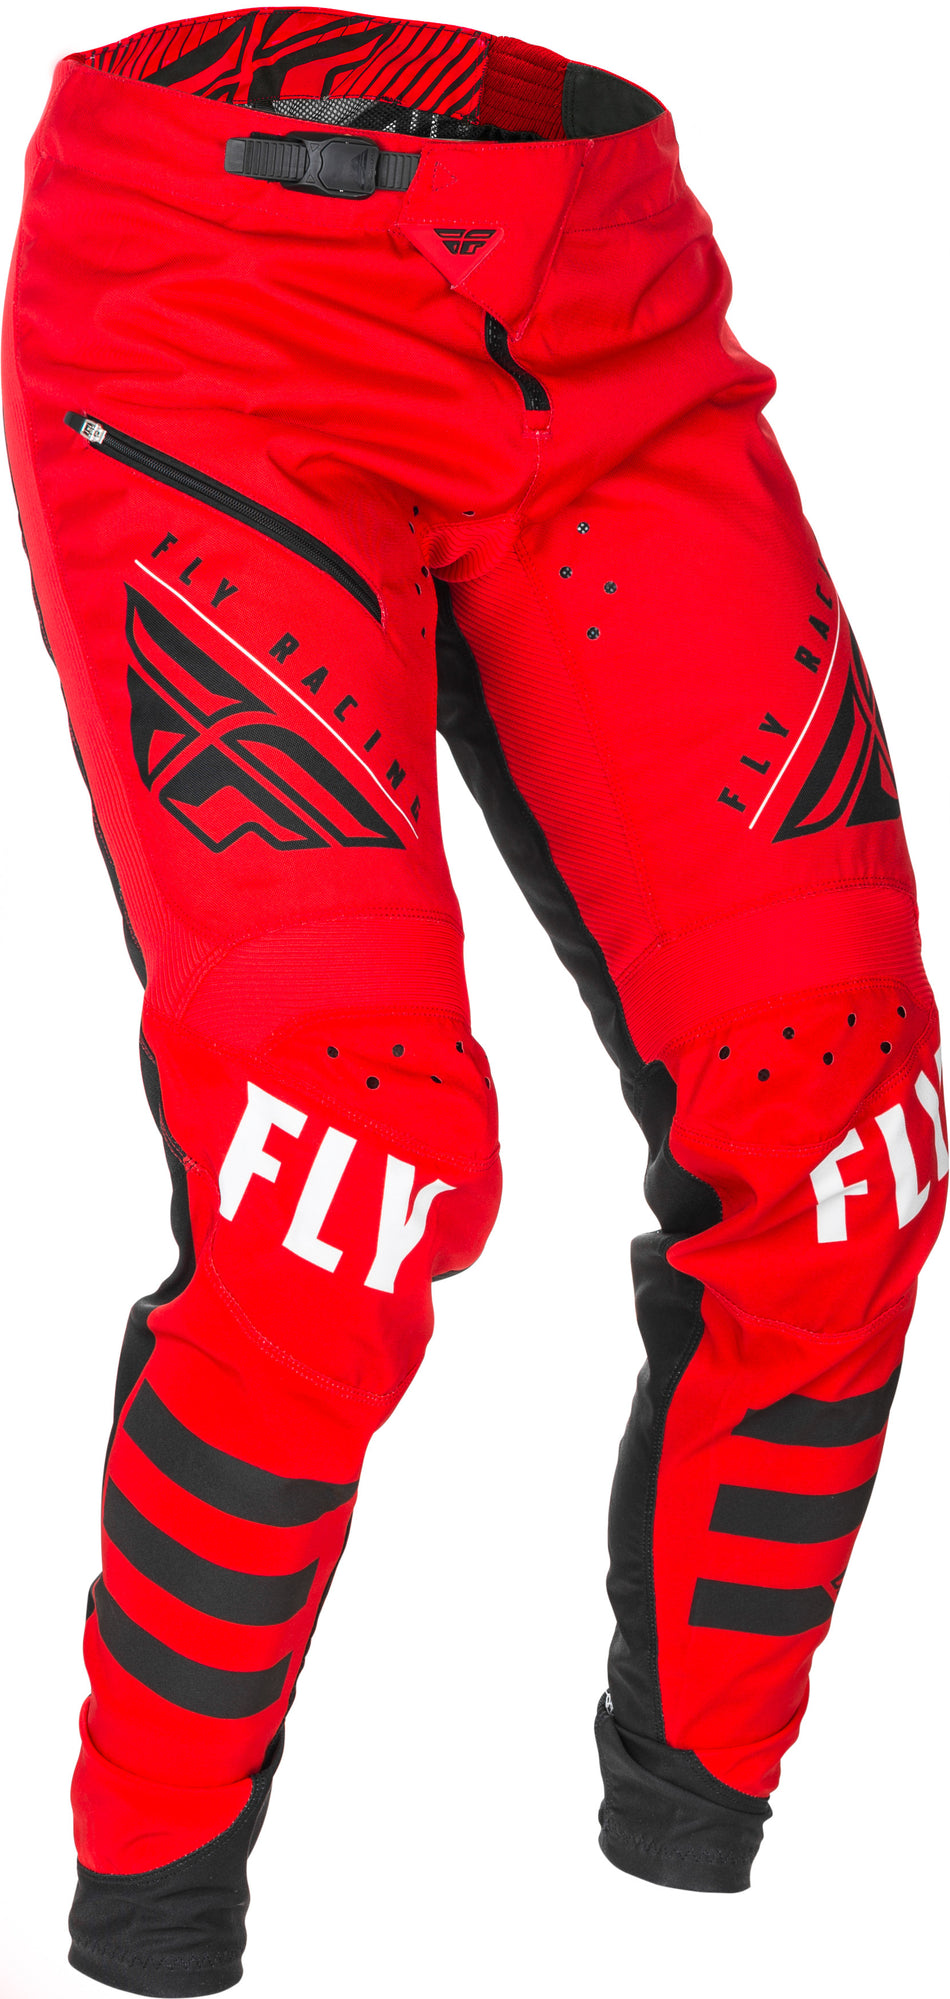 FLY RACING Kinetic Bicycle Pants Red/Black Sz 24 373-04224